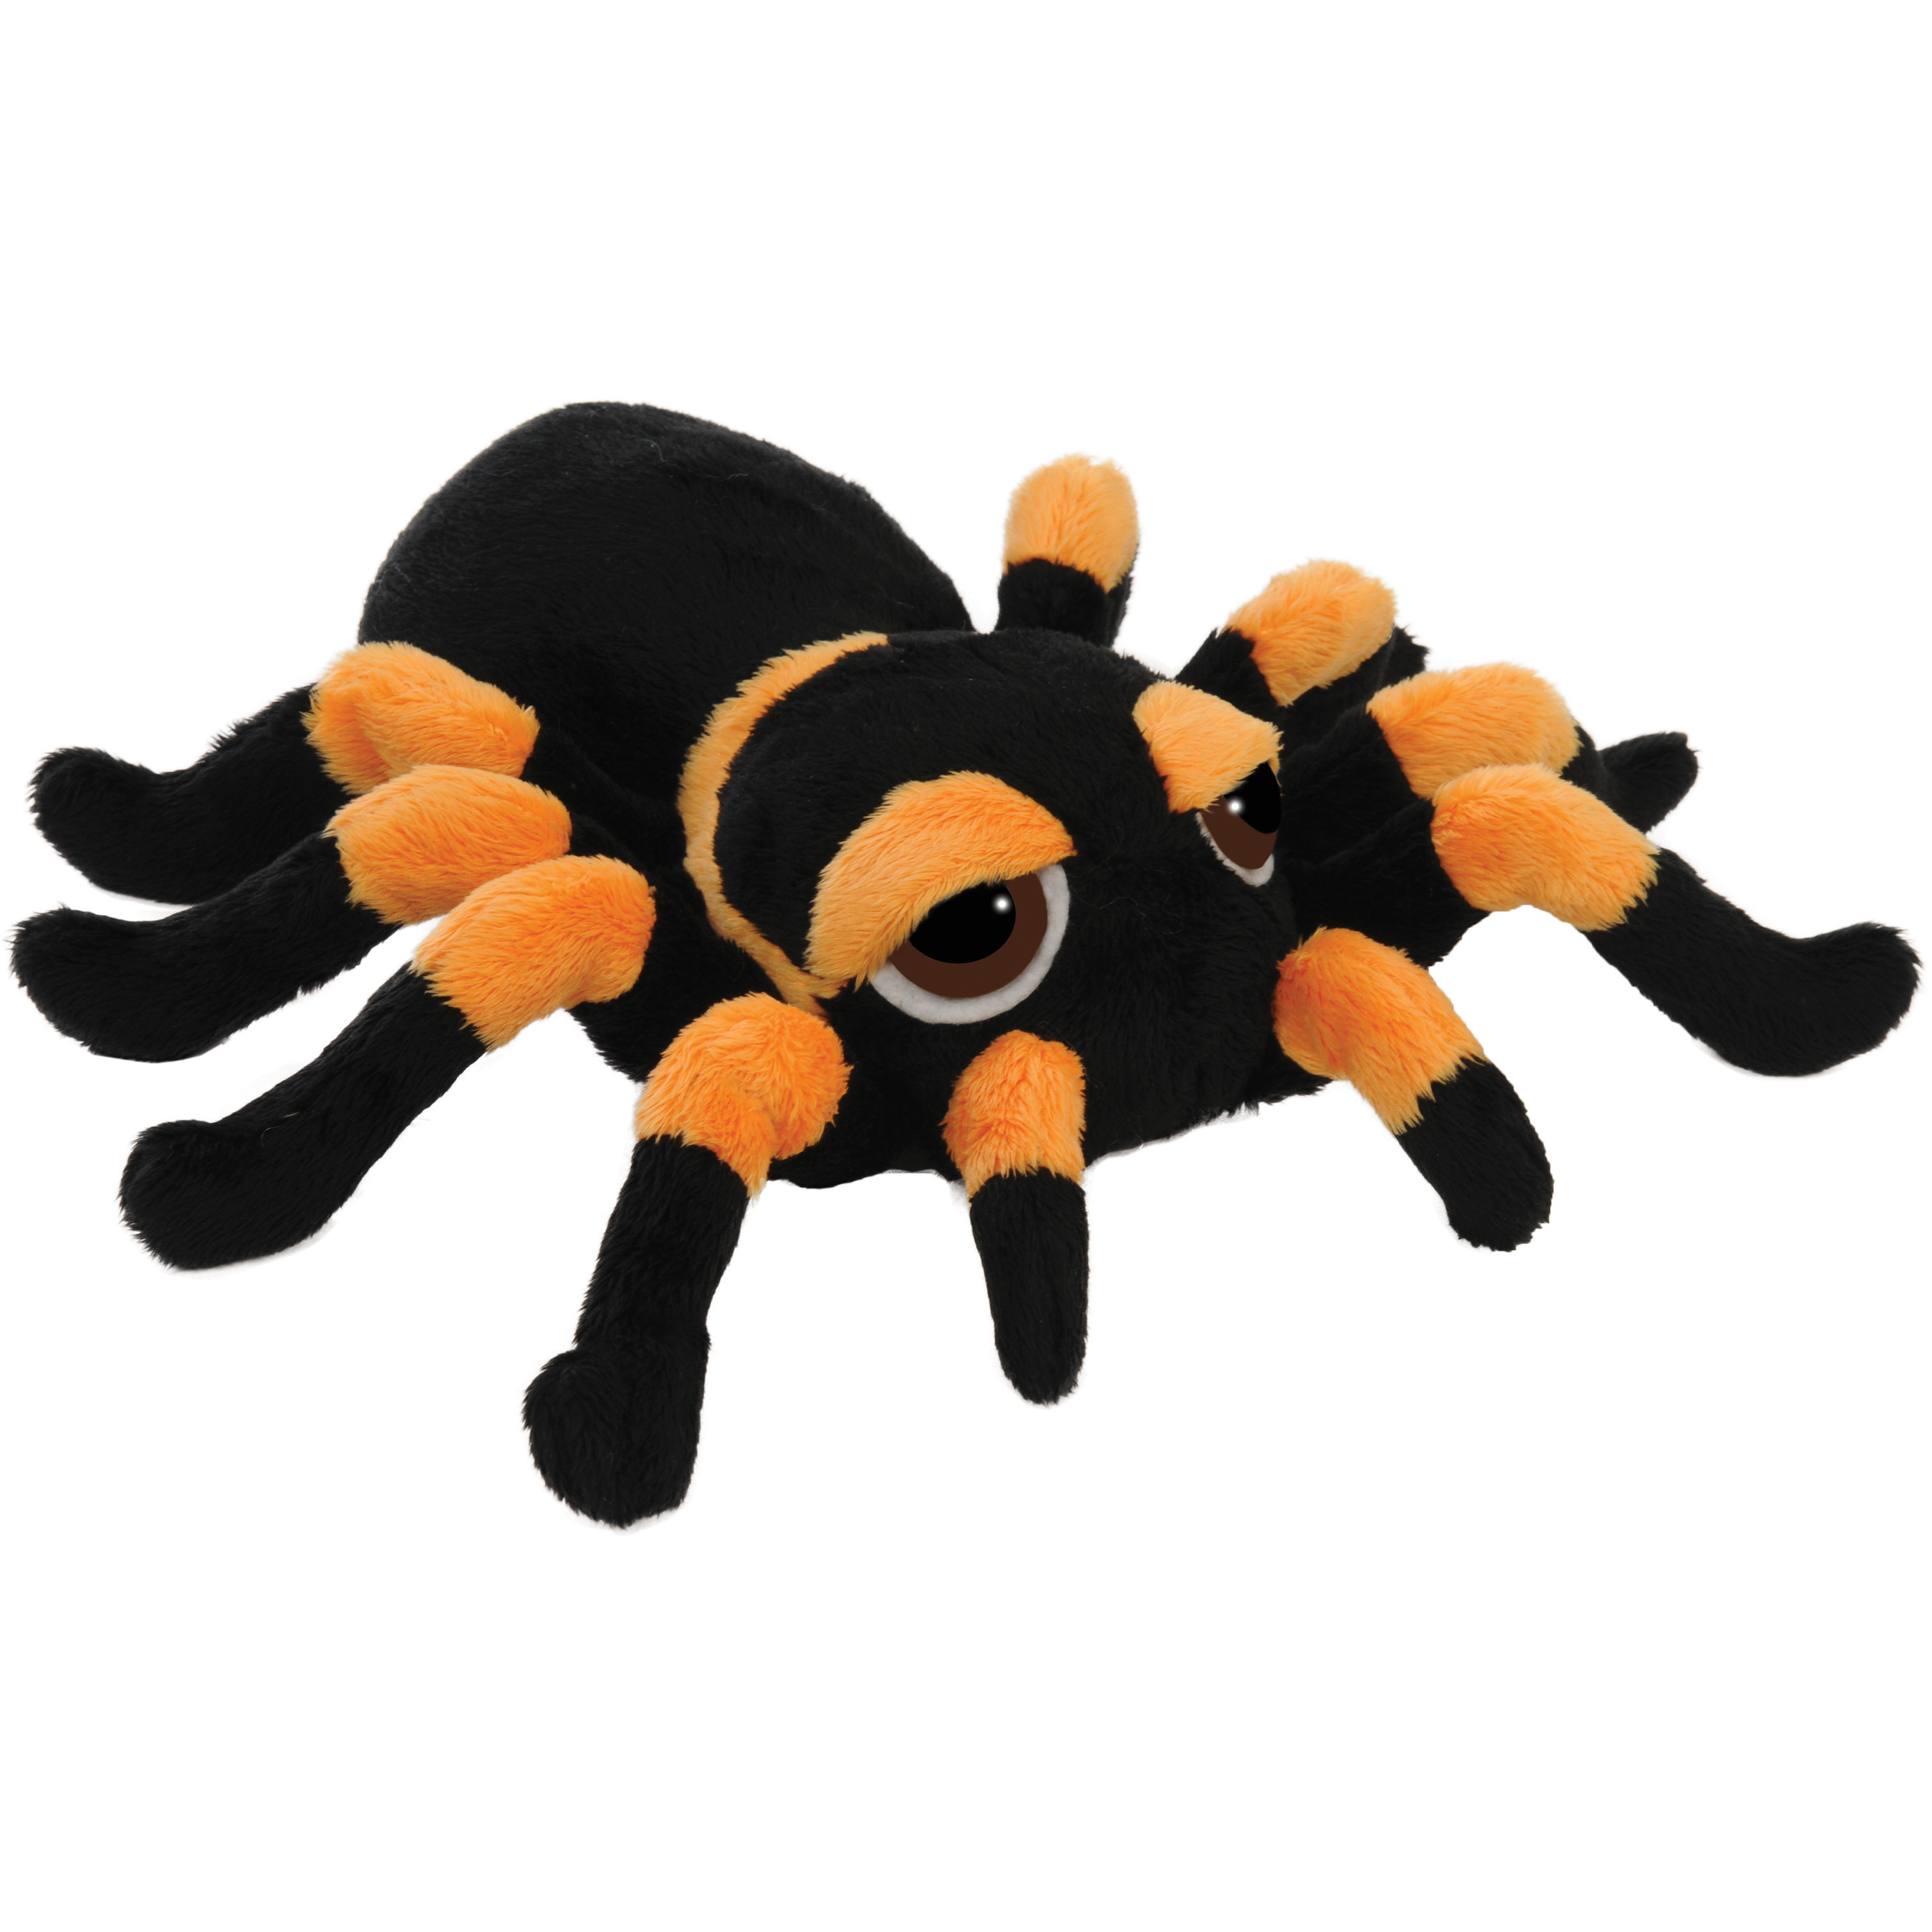 Suki Gifts Pluche knuffel spin - tarantula - zwart/oranje - 22 cm - speelgoed -